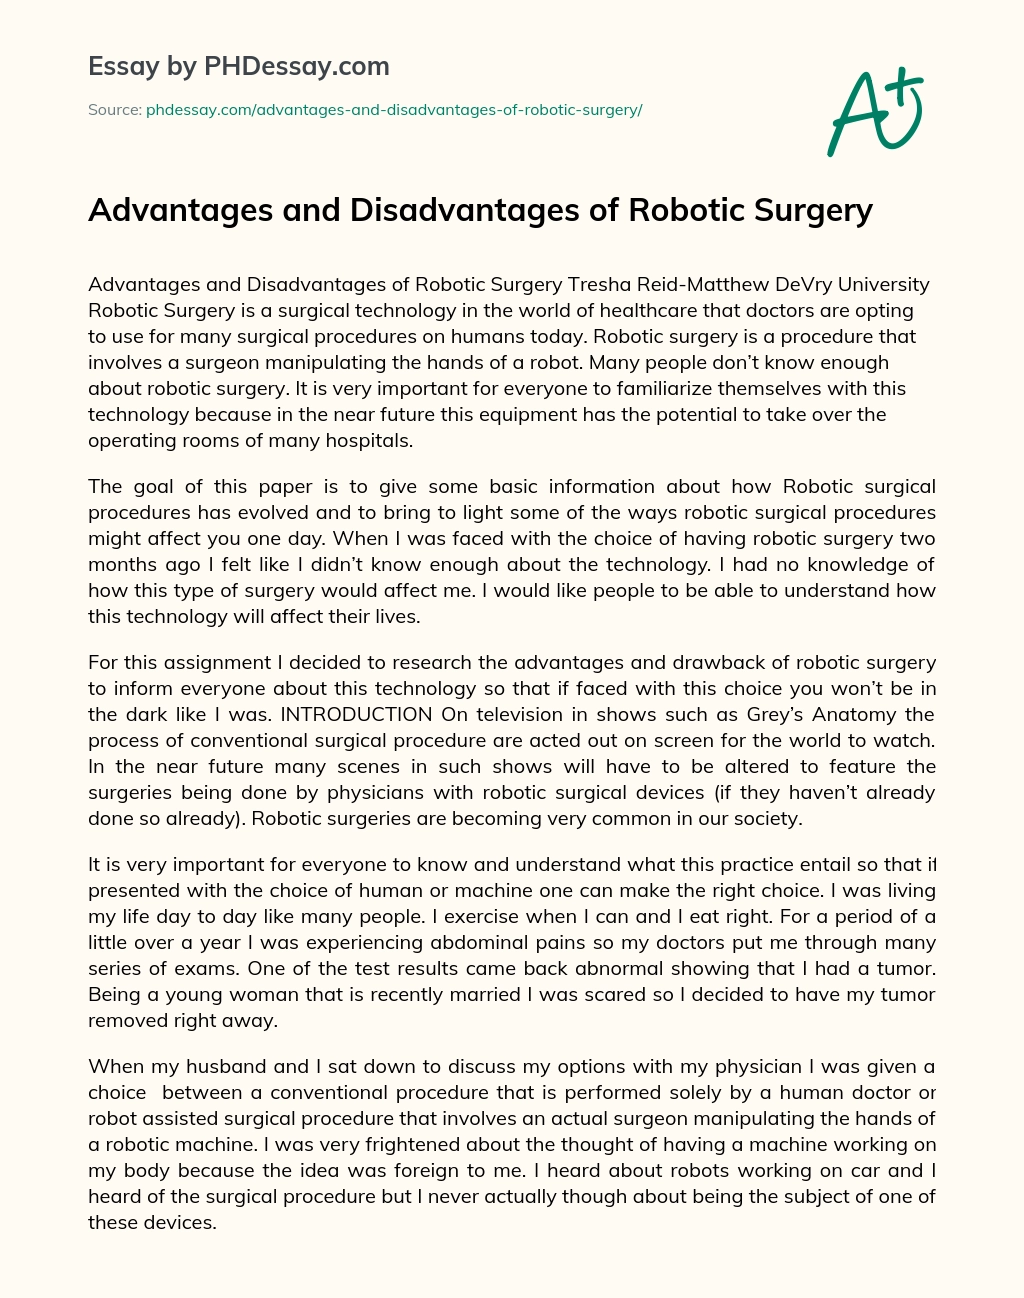 Advantages and Disadvantages of Robotic Surgery essay